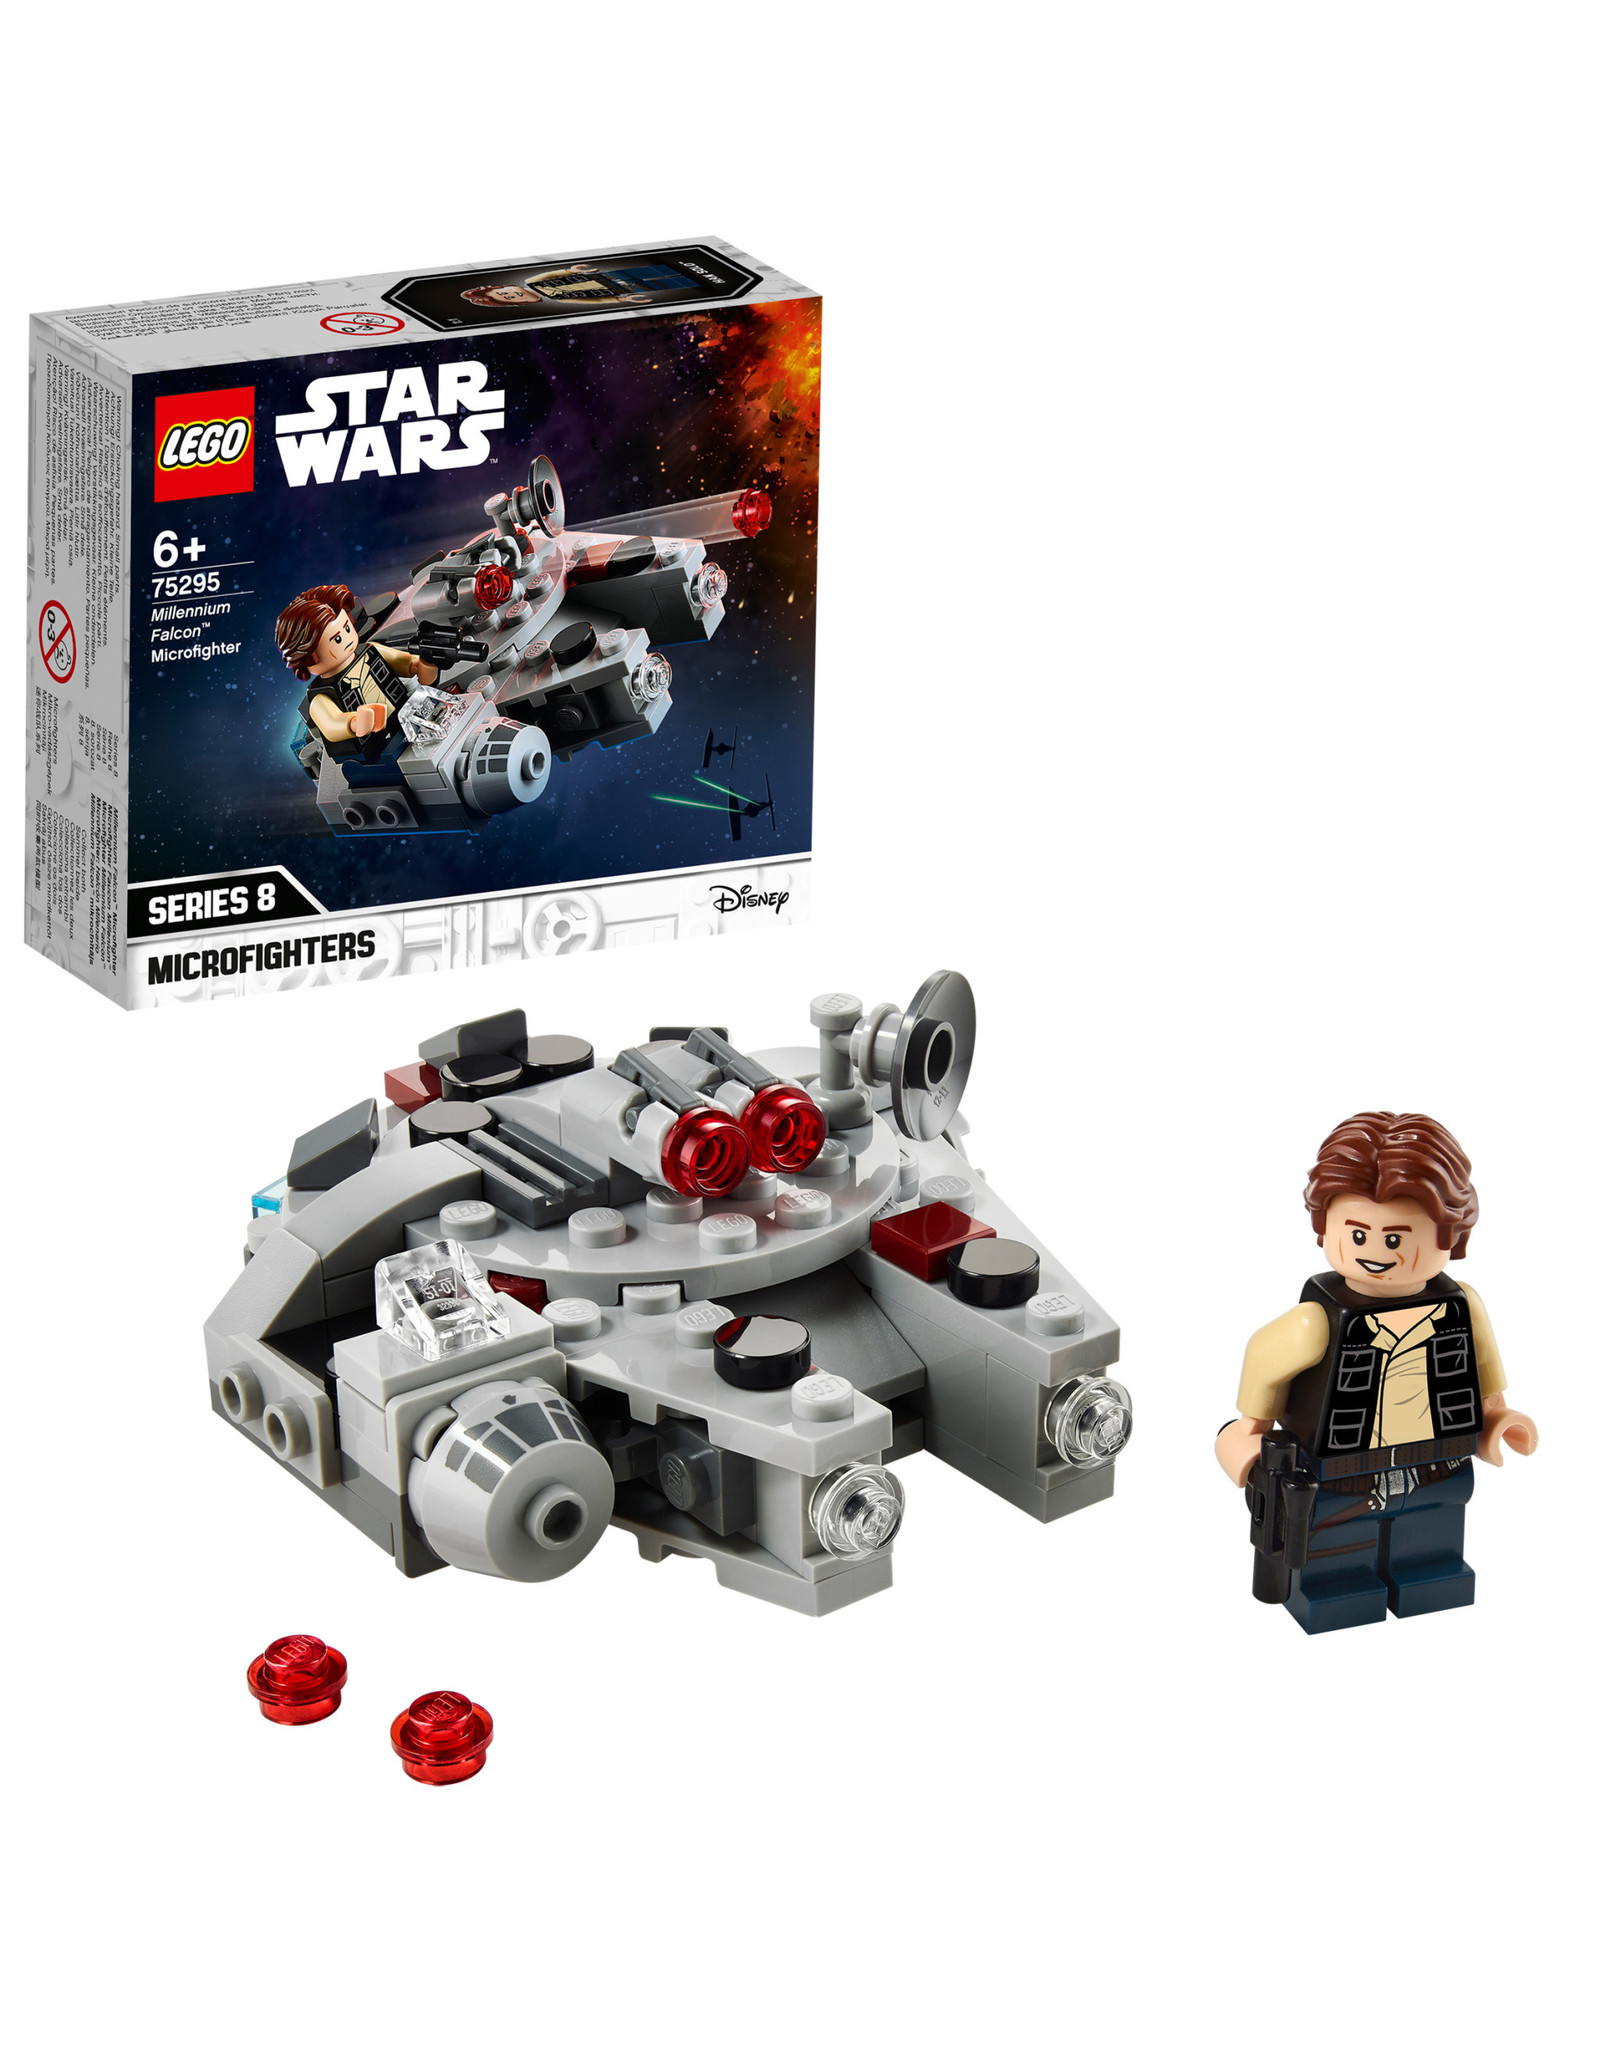 LEGO Lego Starwars 75295 Millennium Falcon™ Microfighter